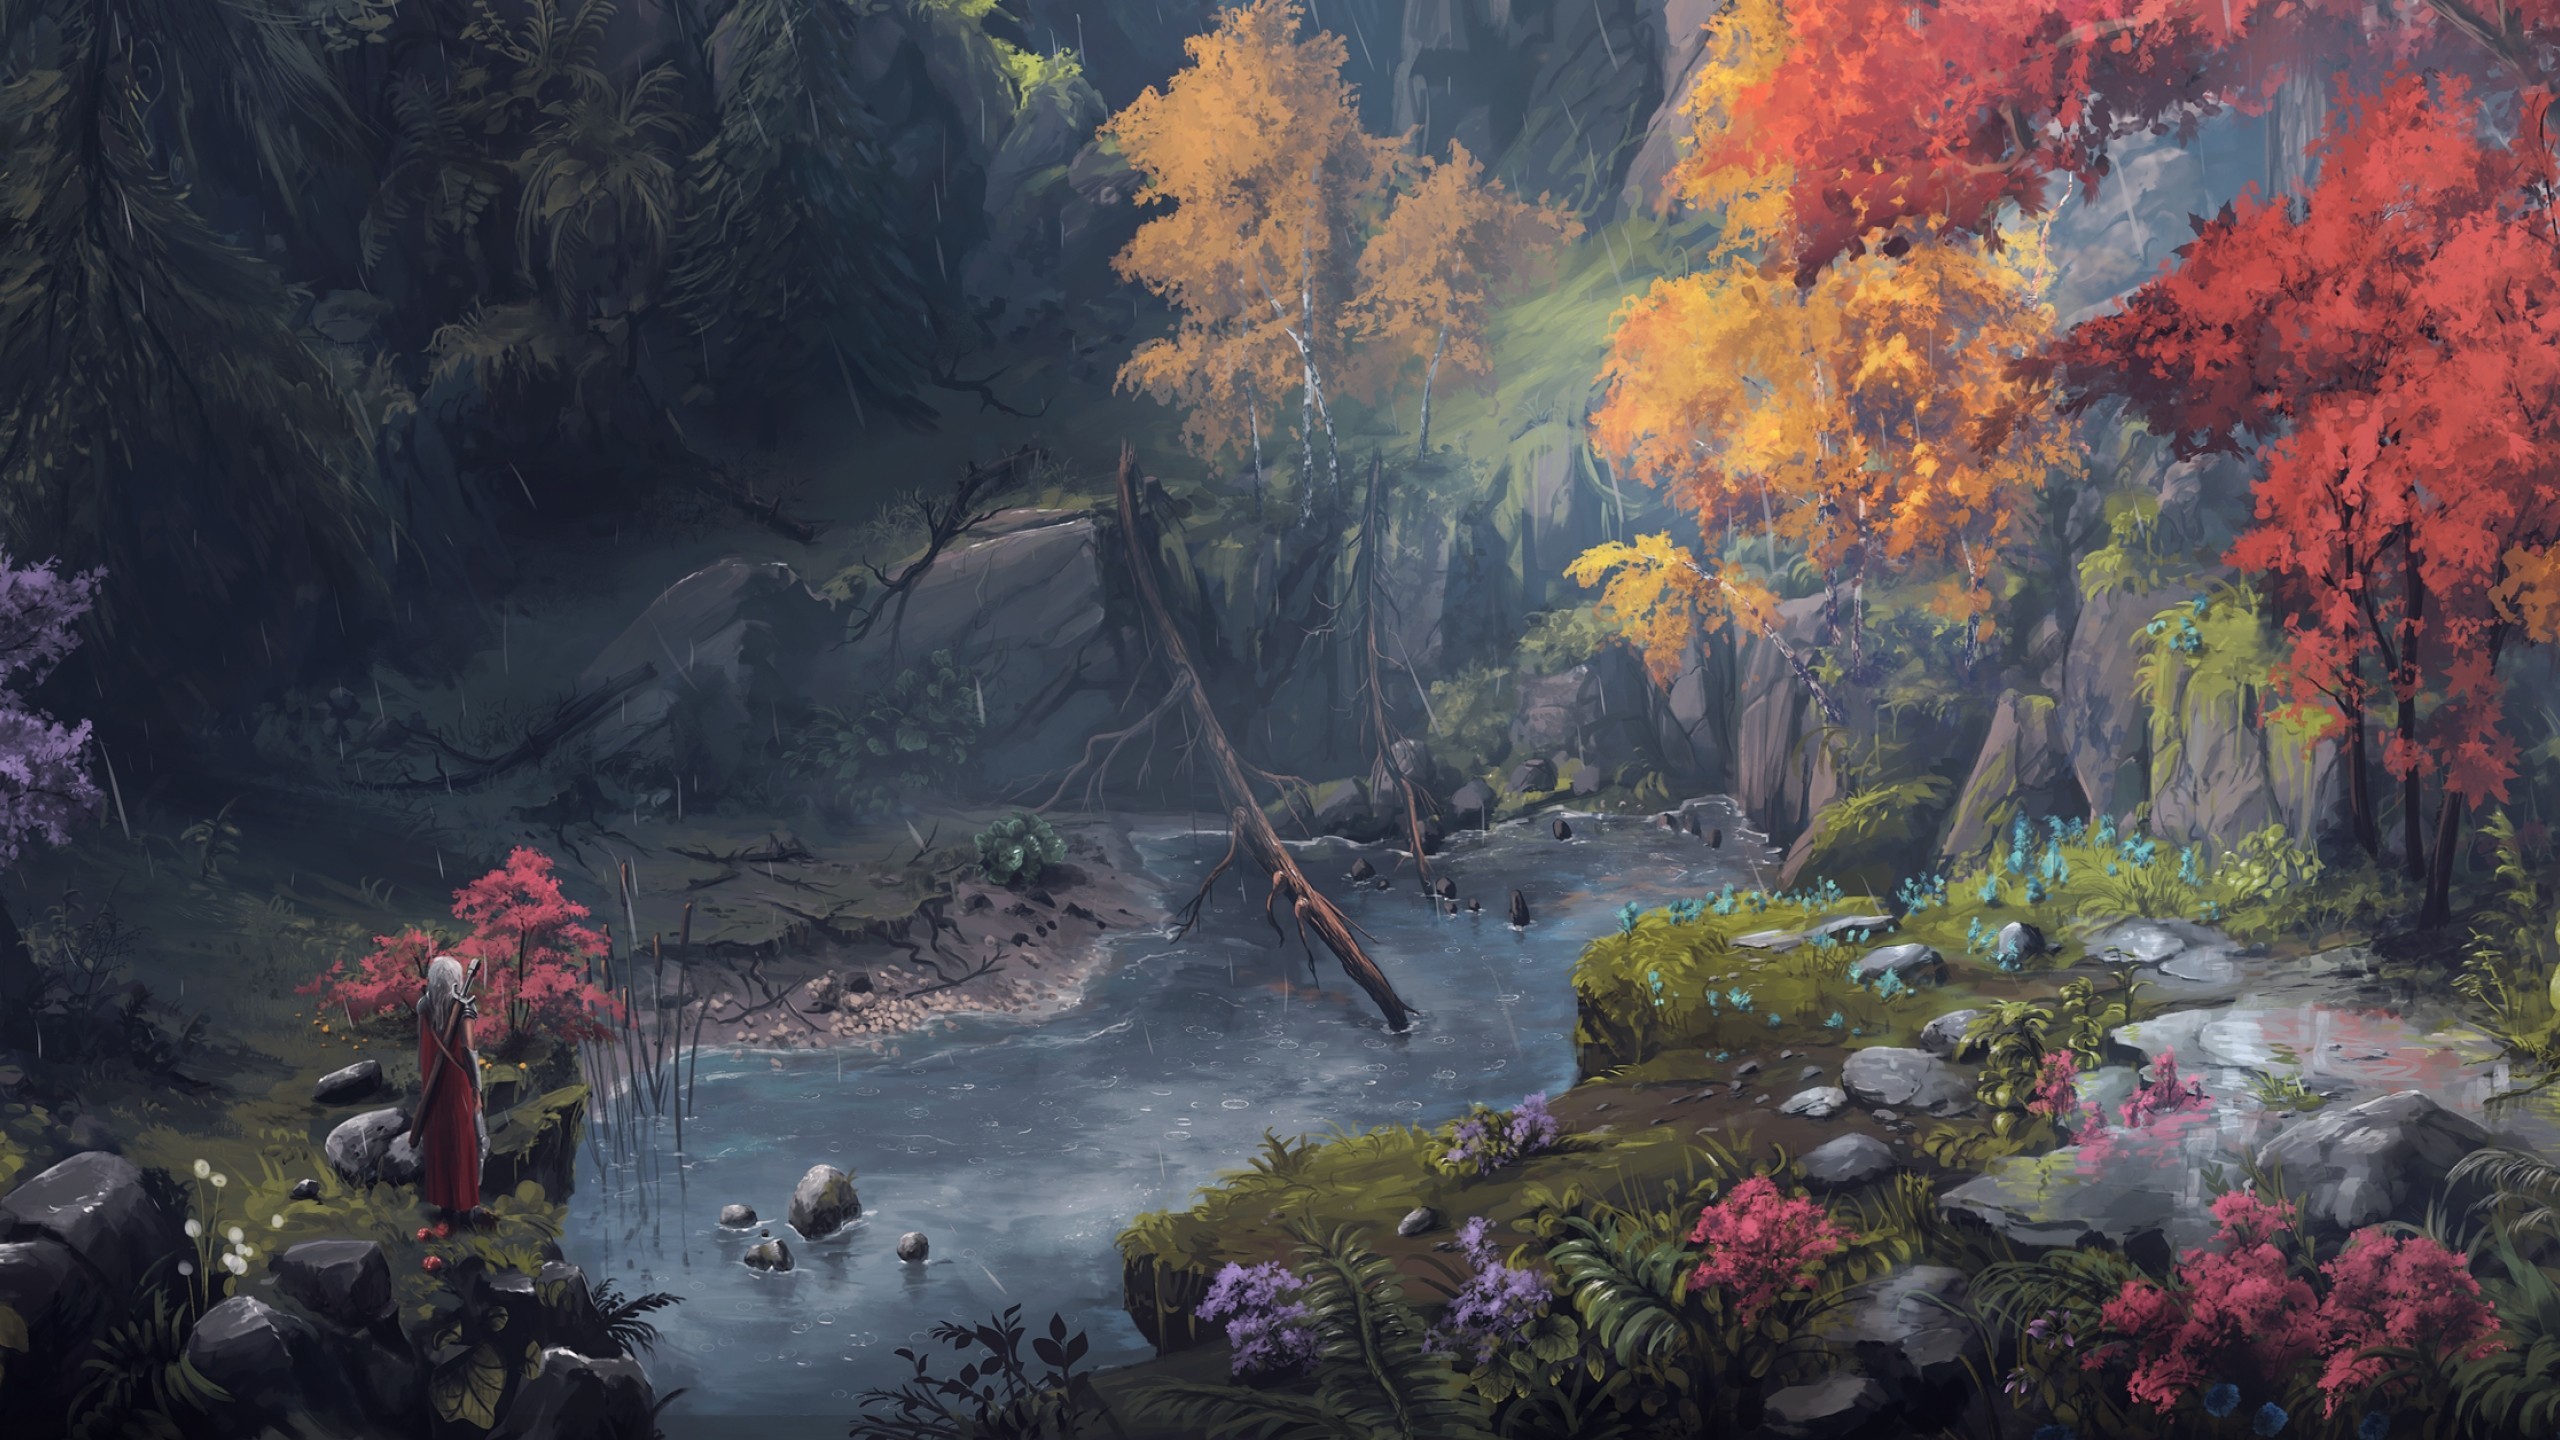 Artwork Fantasy Art River Forest Max Suleimanov 2560x1440